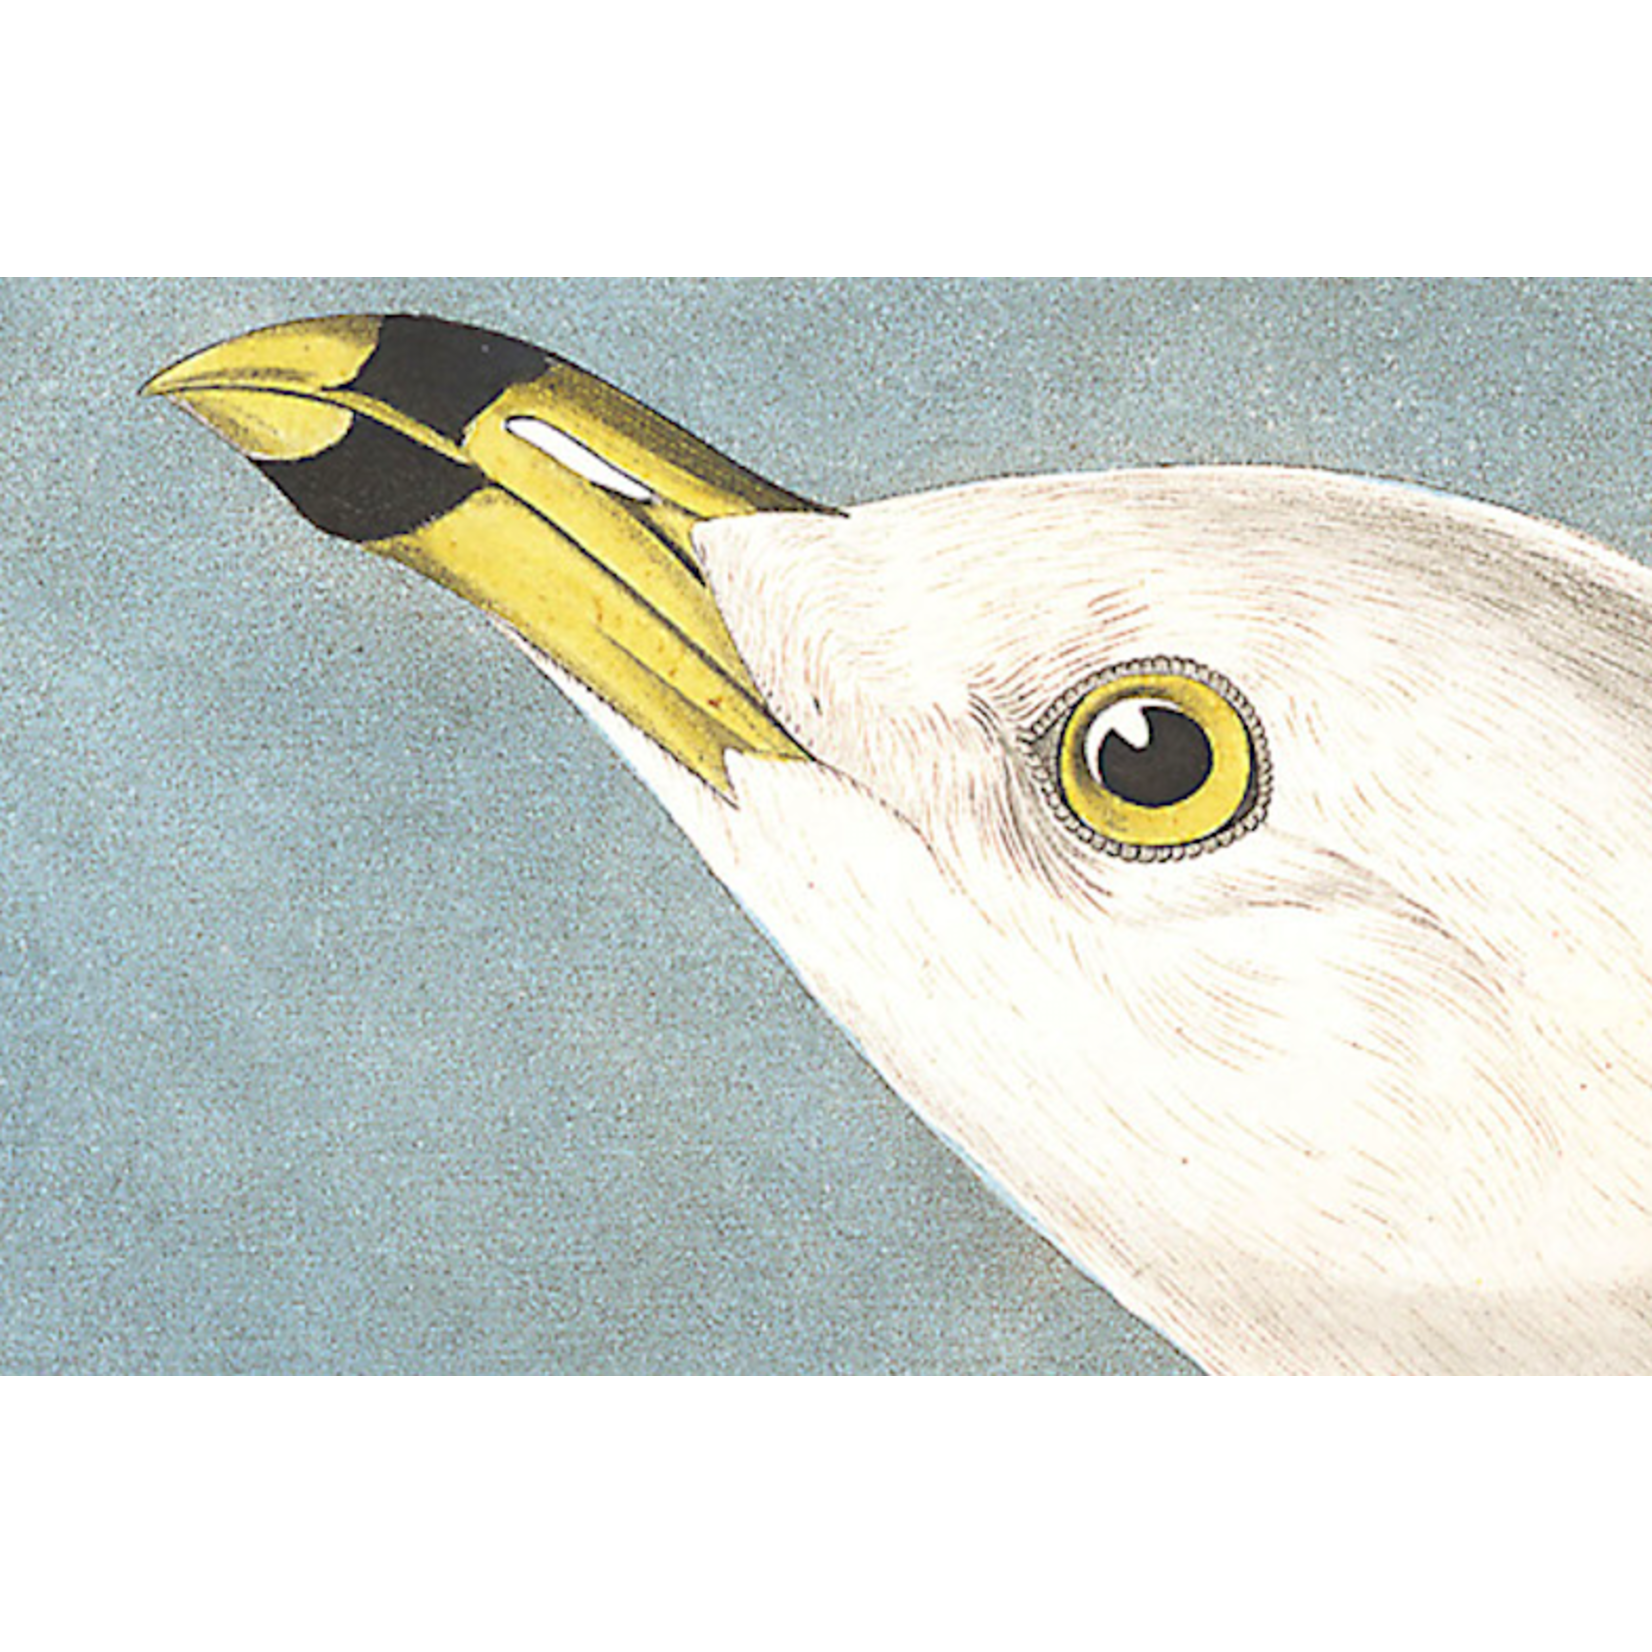 Fine Art Print on Rag Paper Common American Gull by John James Audubon